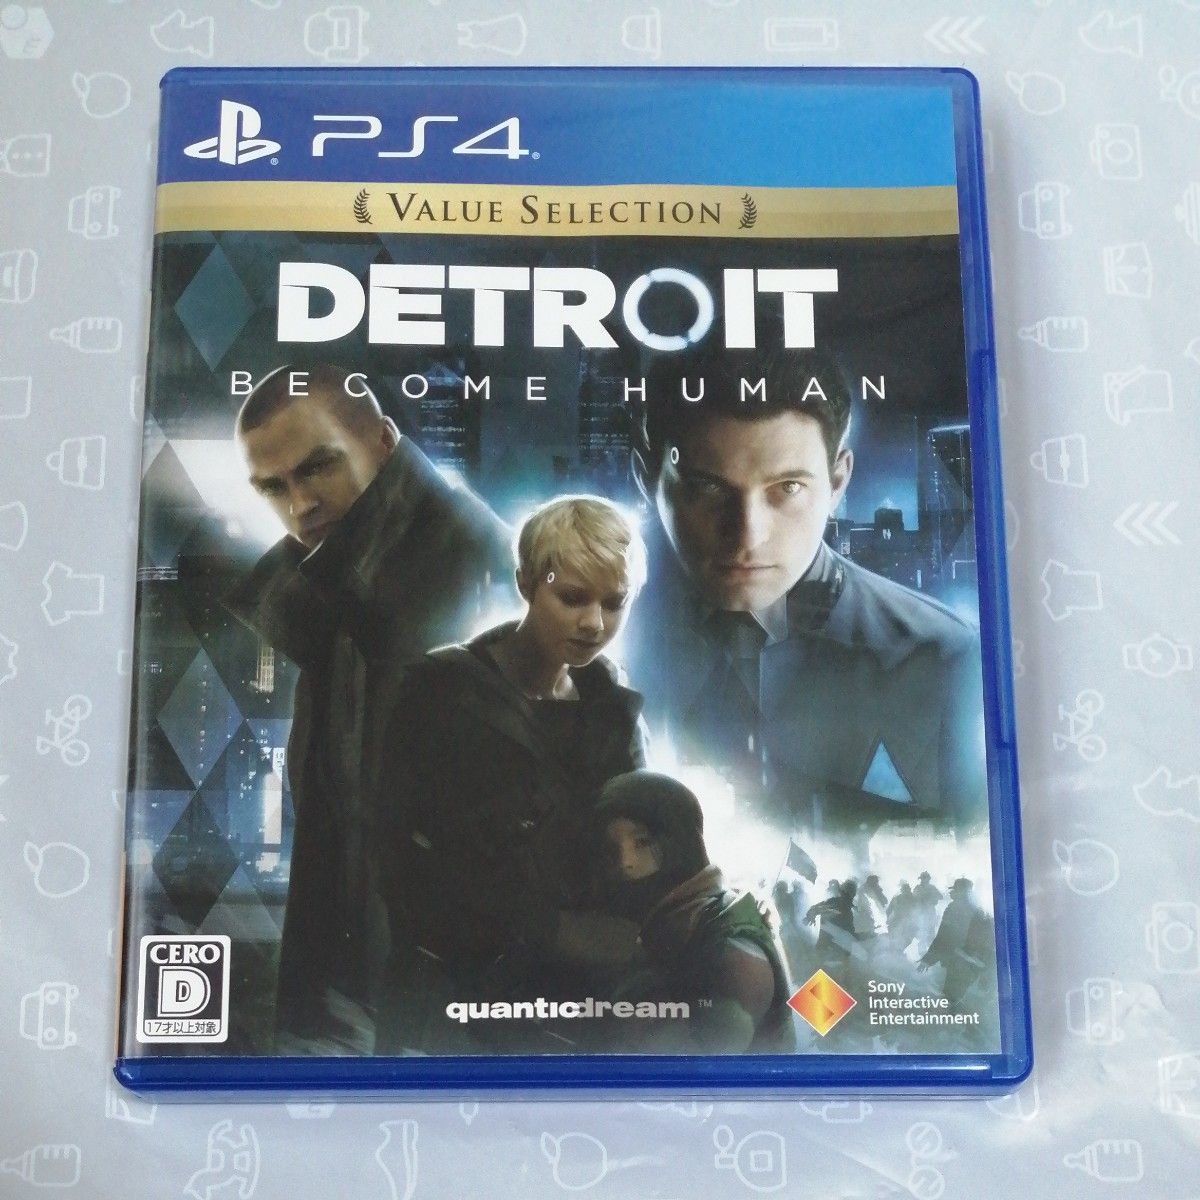 【PS4】 Detroit: Become Human デトロイト: ビカムヒューマン [Value Selection]